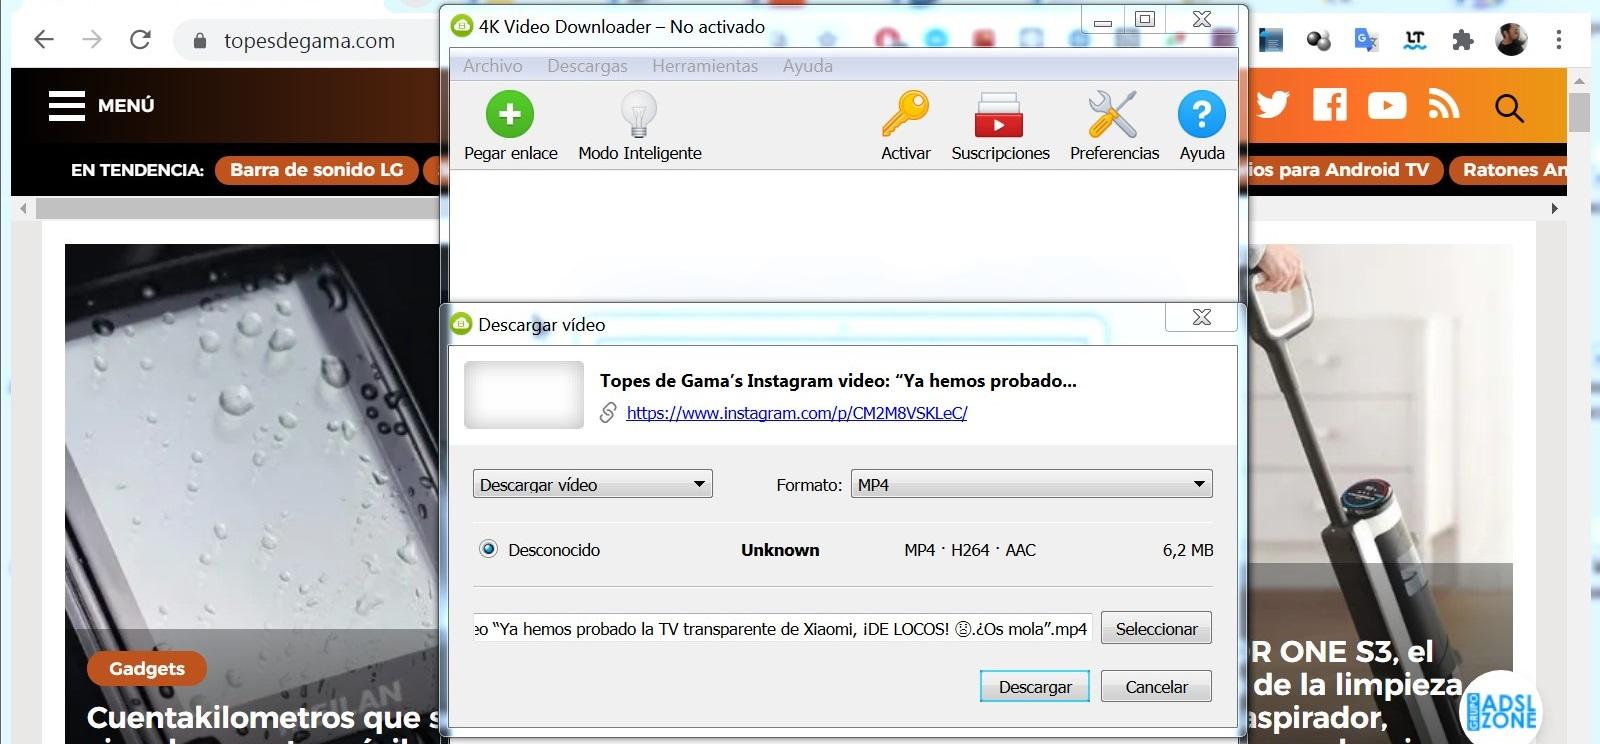 4K Downloader 5.7.6 for ios download free